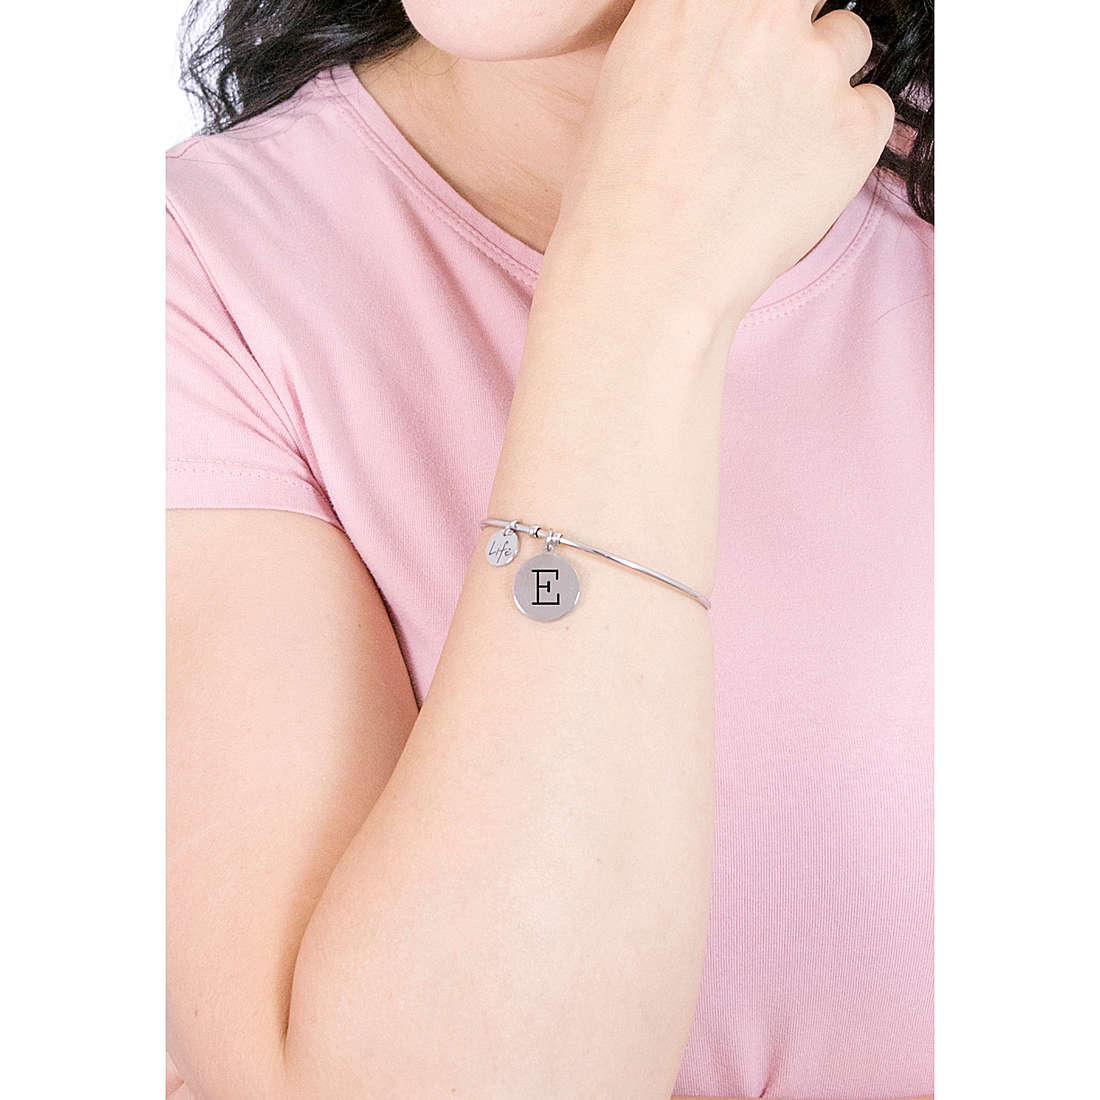 Kidult bracelets Symbols woman 231555e wearing